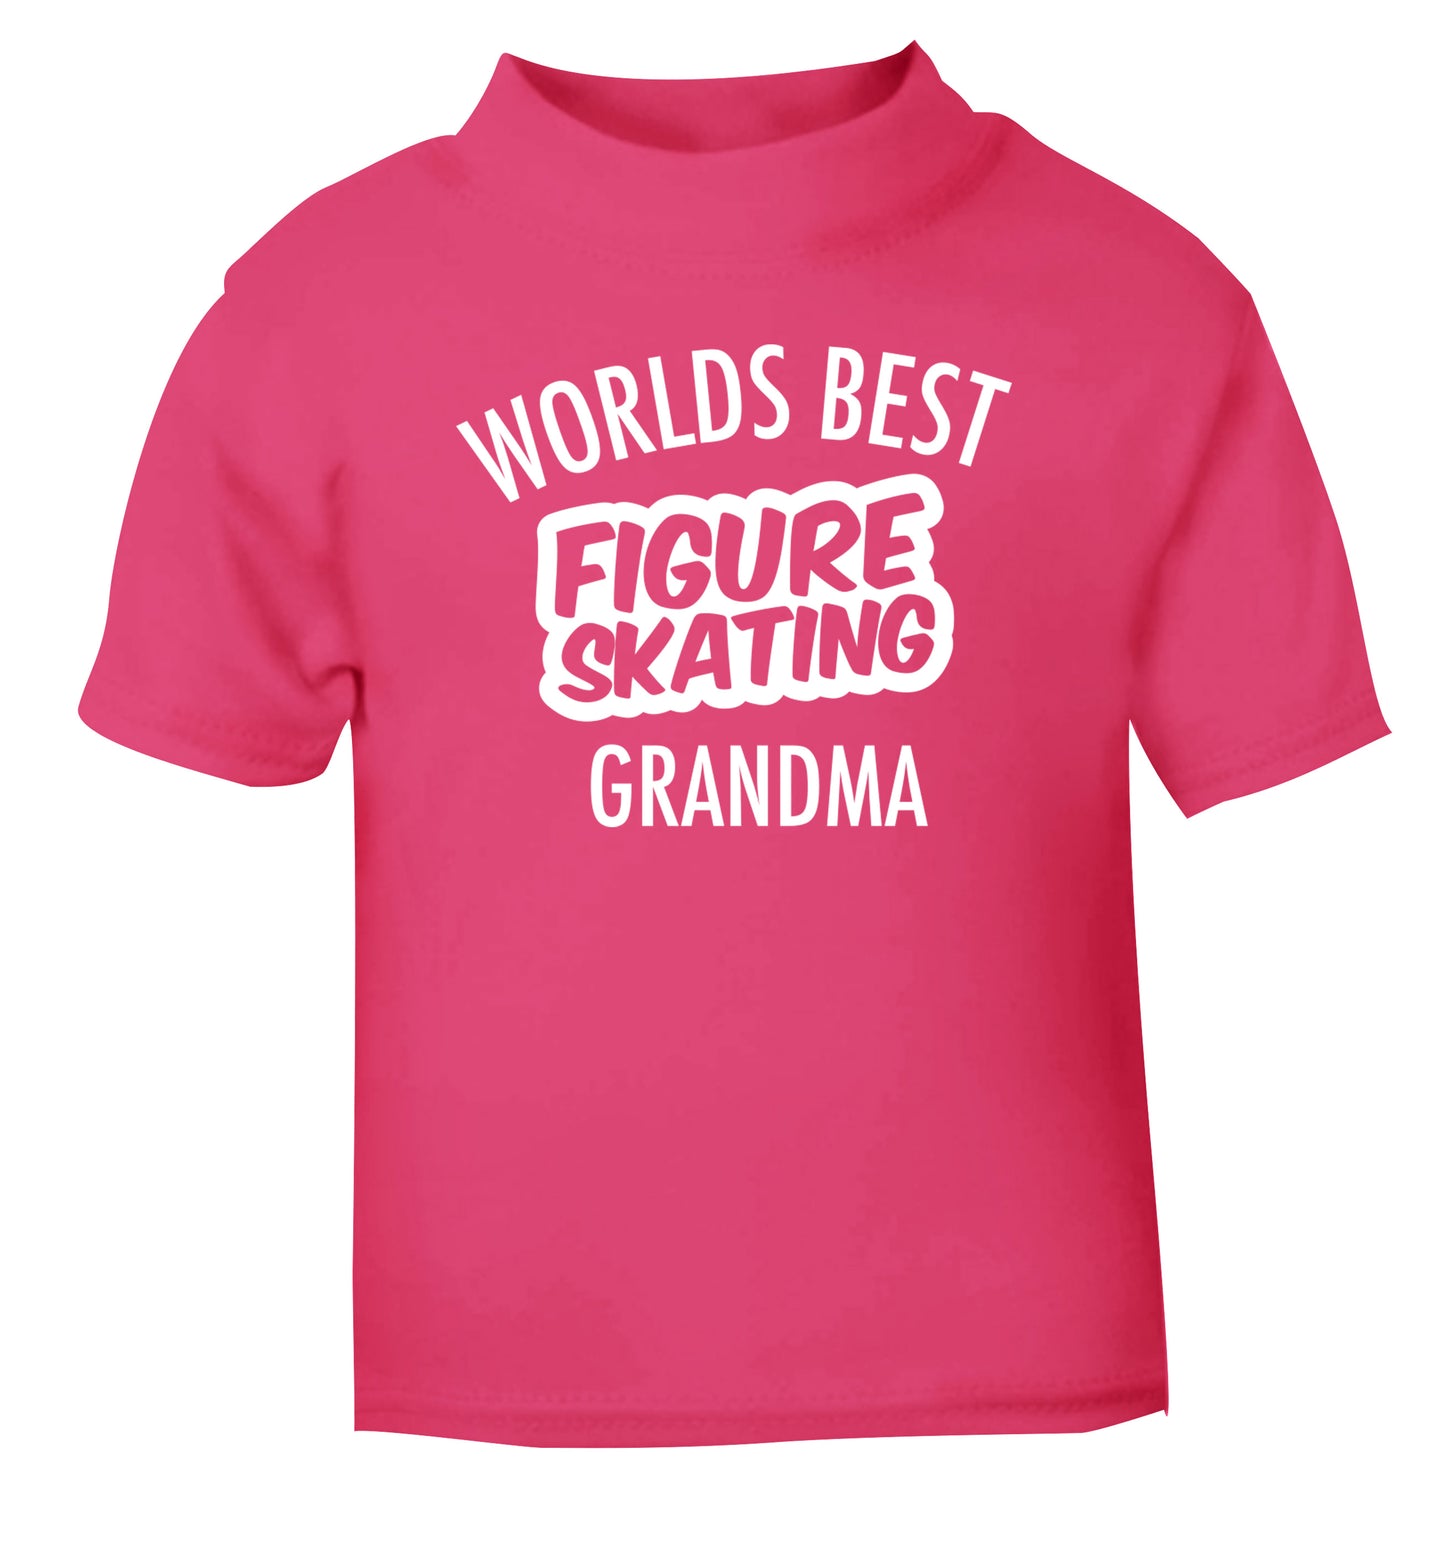 Worlds best figure skating grandma pink Baby Toddler Tshirt 2 Years